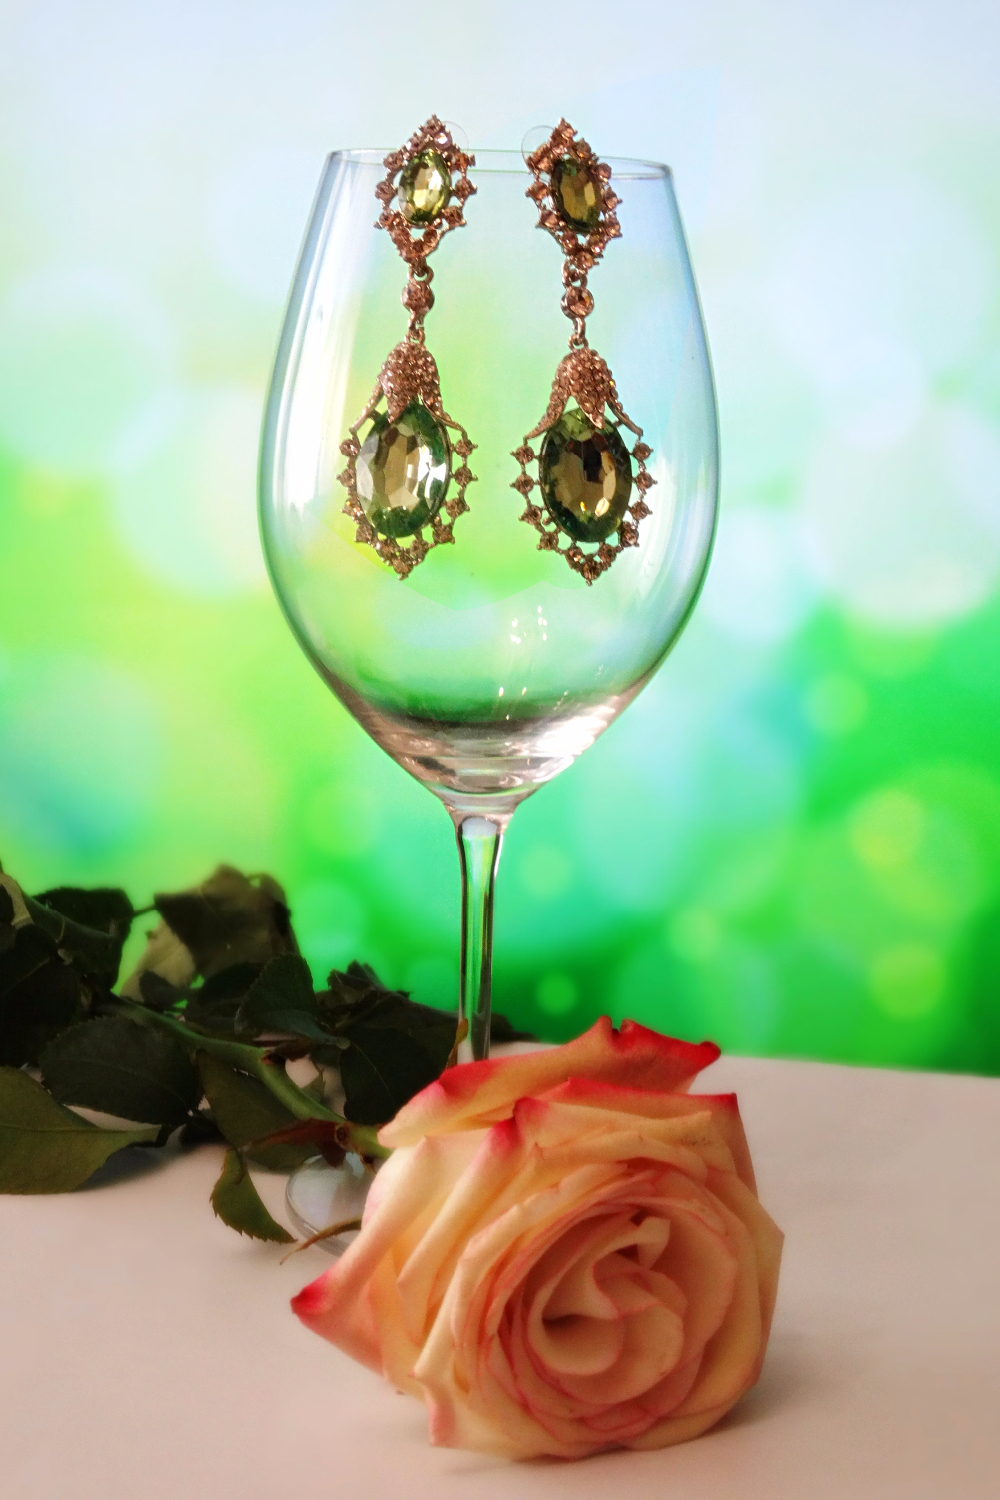 Summer burst with clear green glass rhinestone pendant earrings AAA + eardrop ms crystal elements--